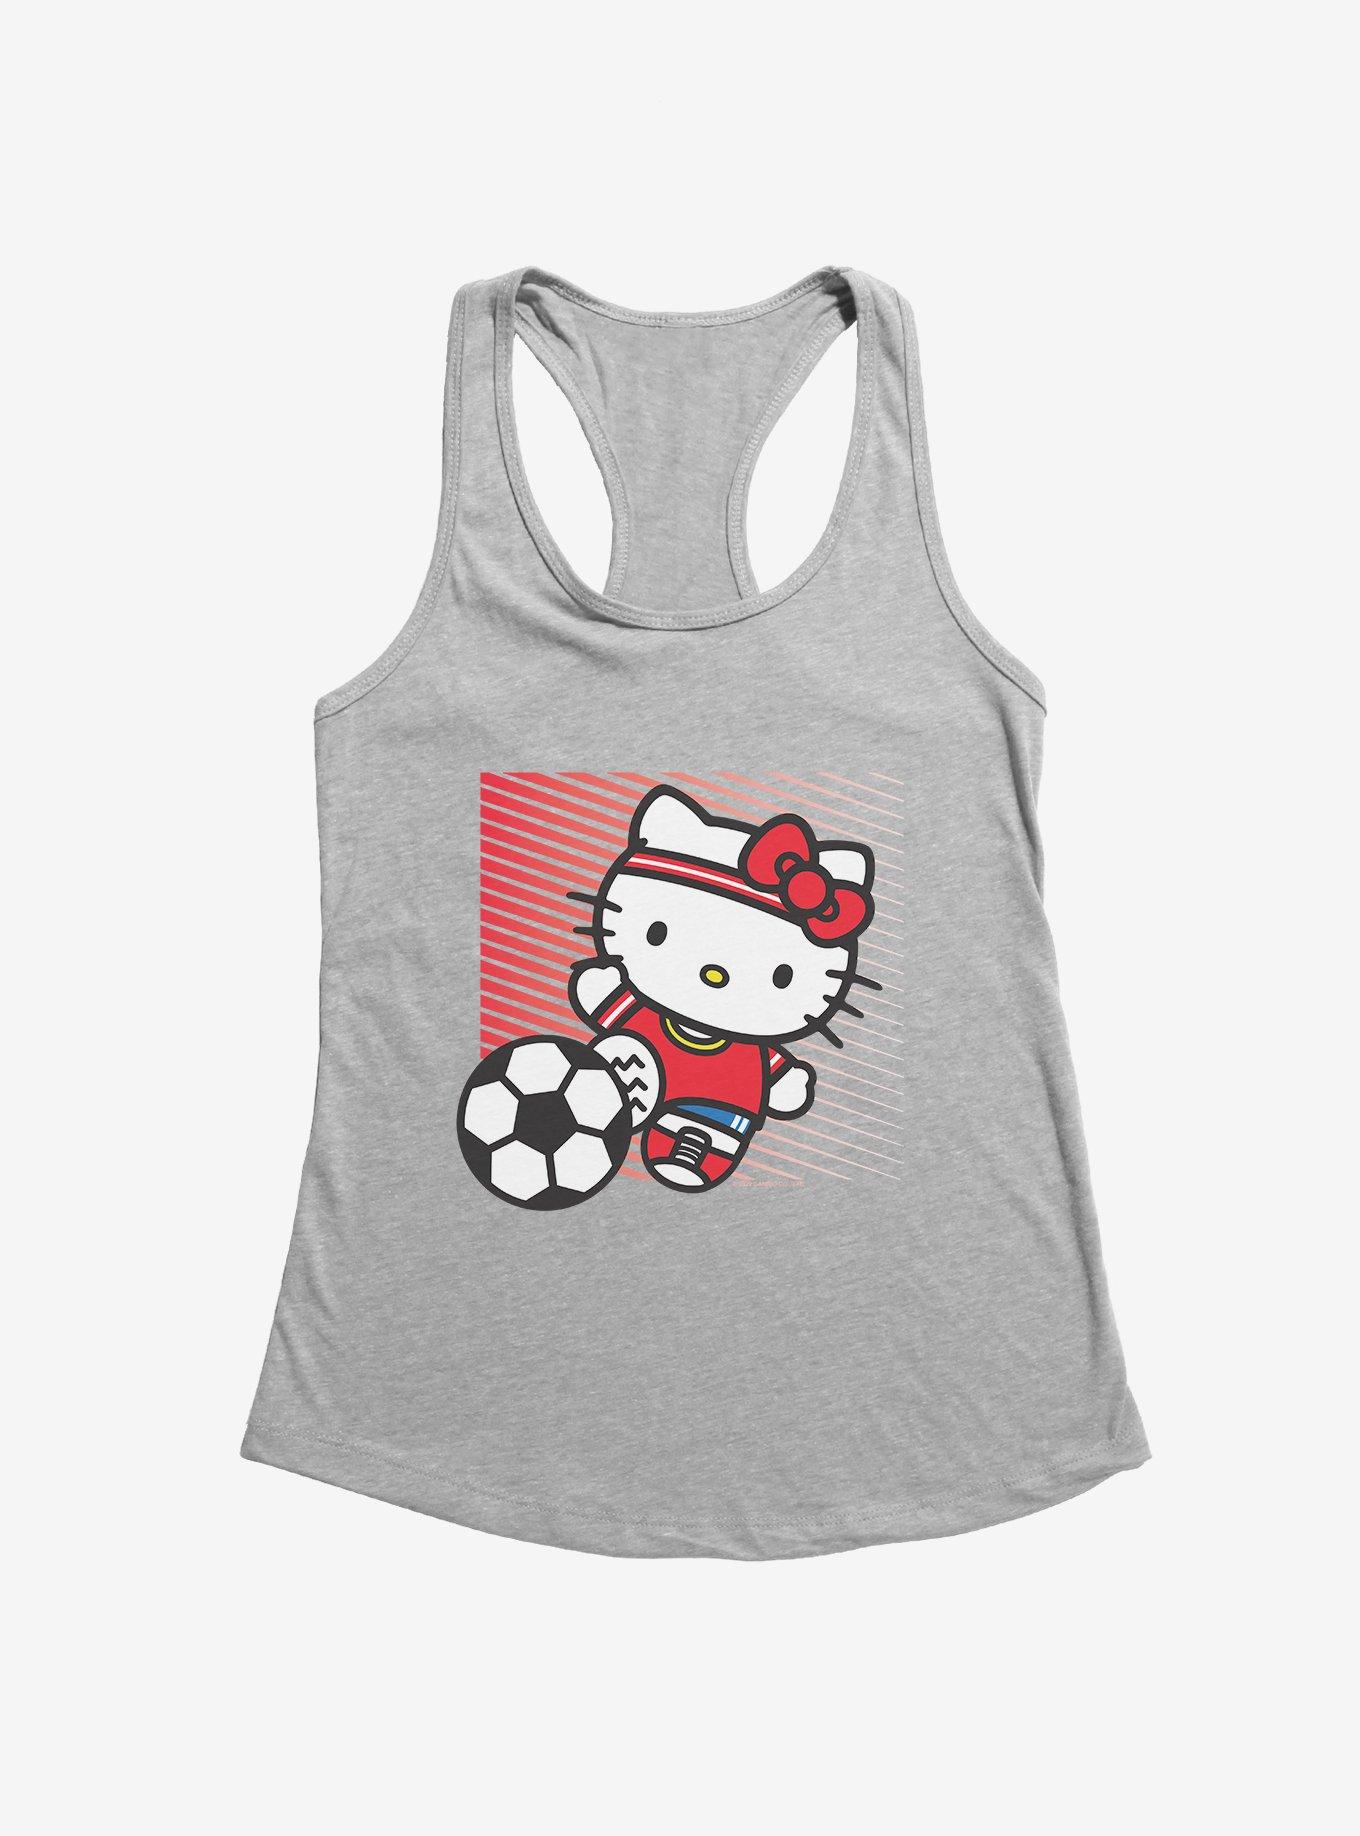 Hello Kitty Soccer Speed Girls Tank, , hi-res